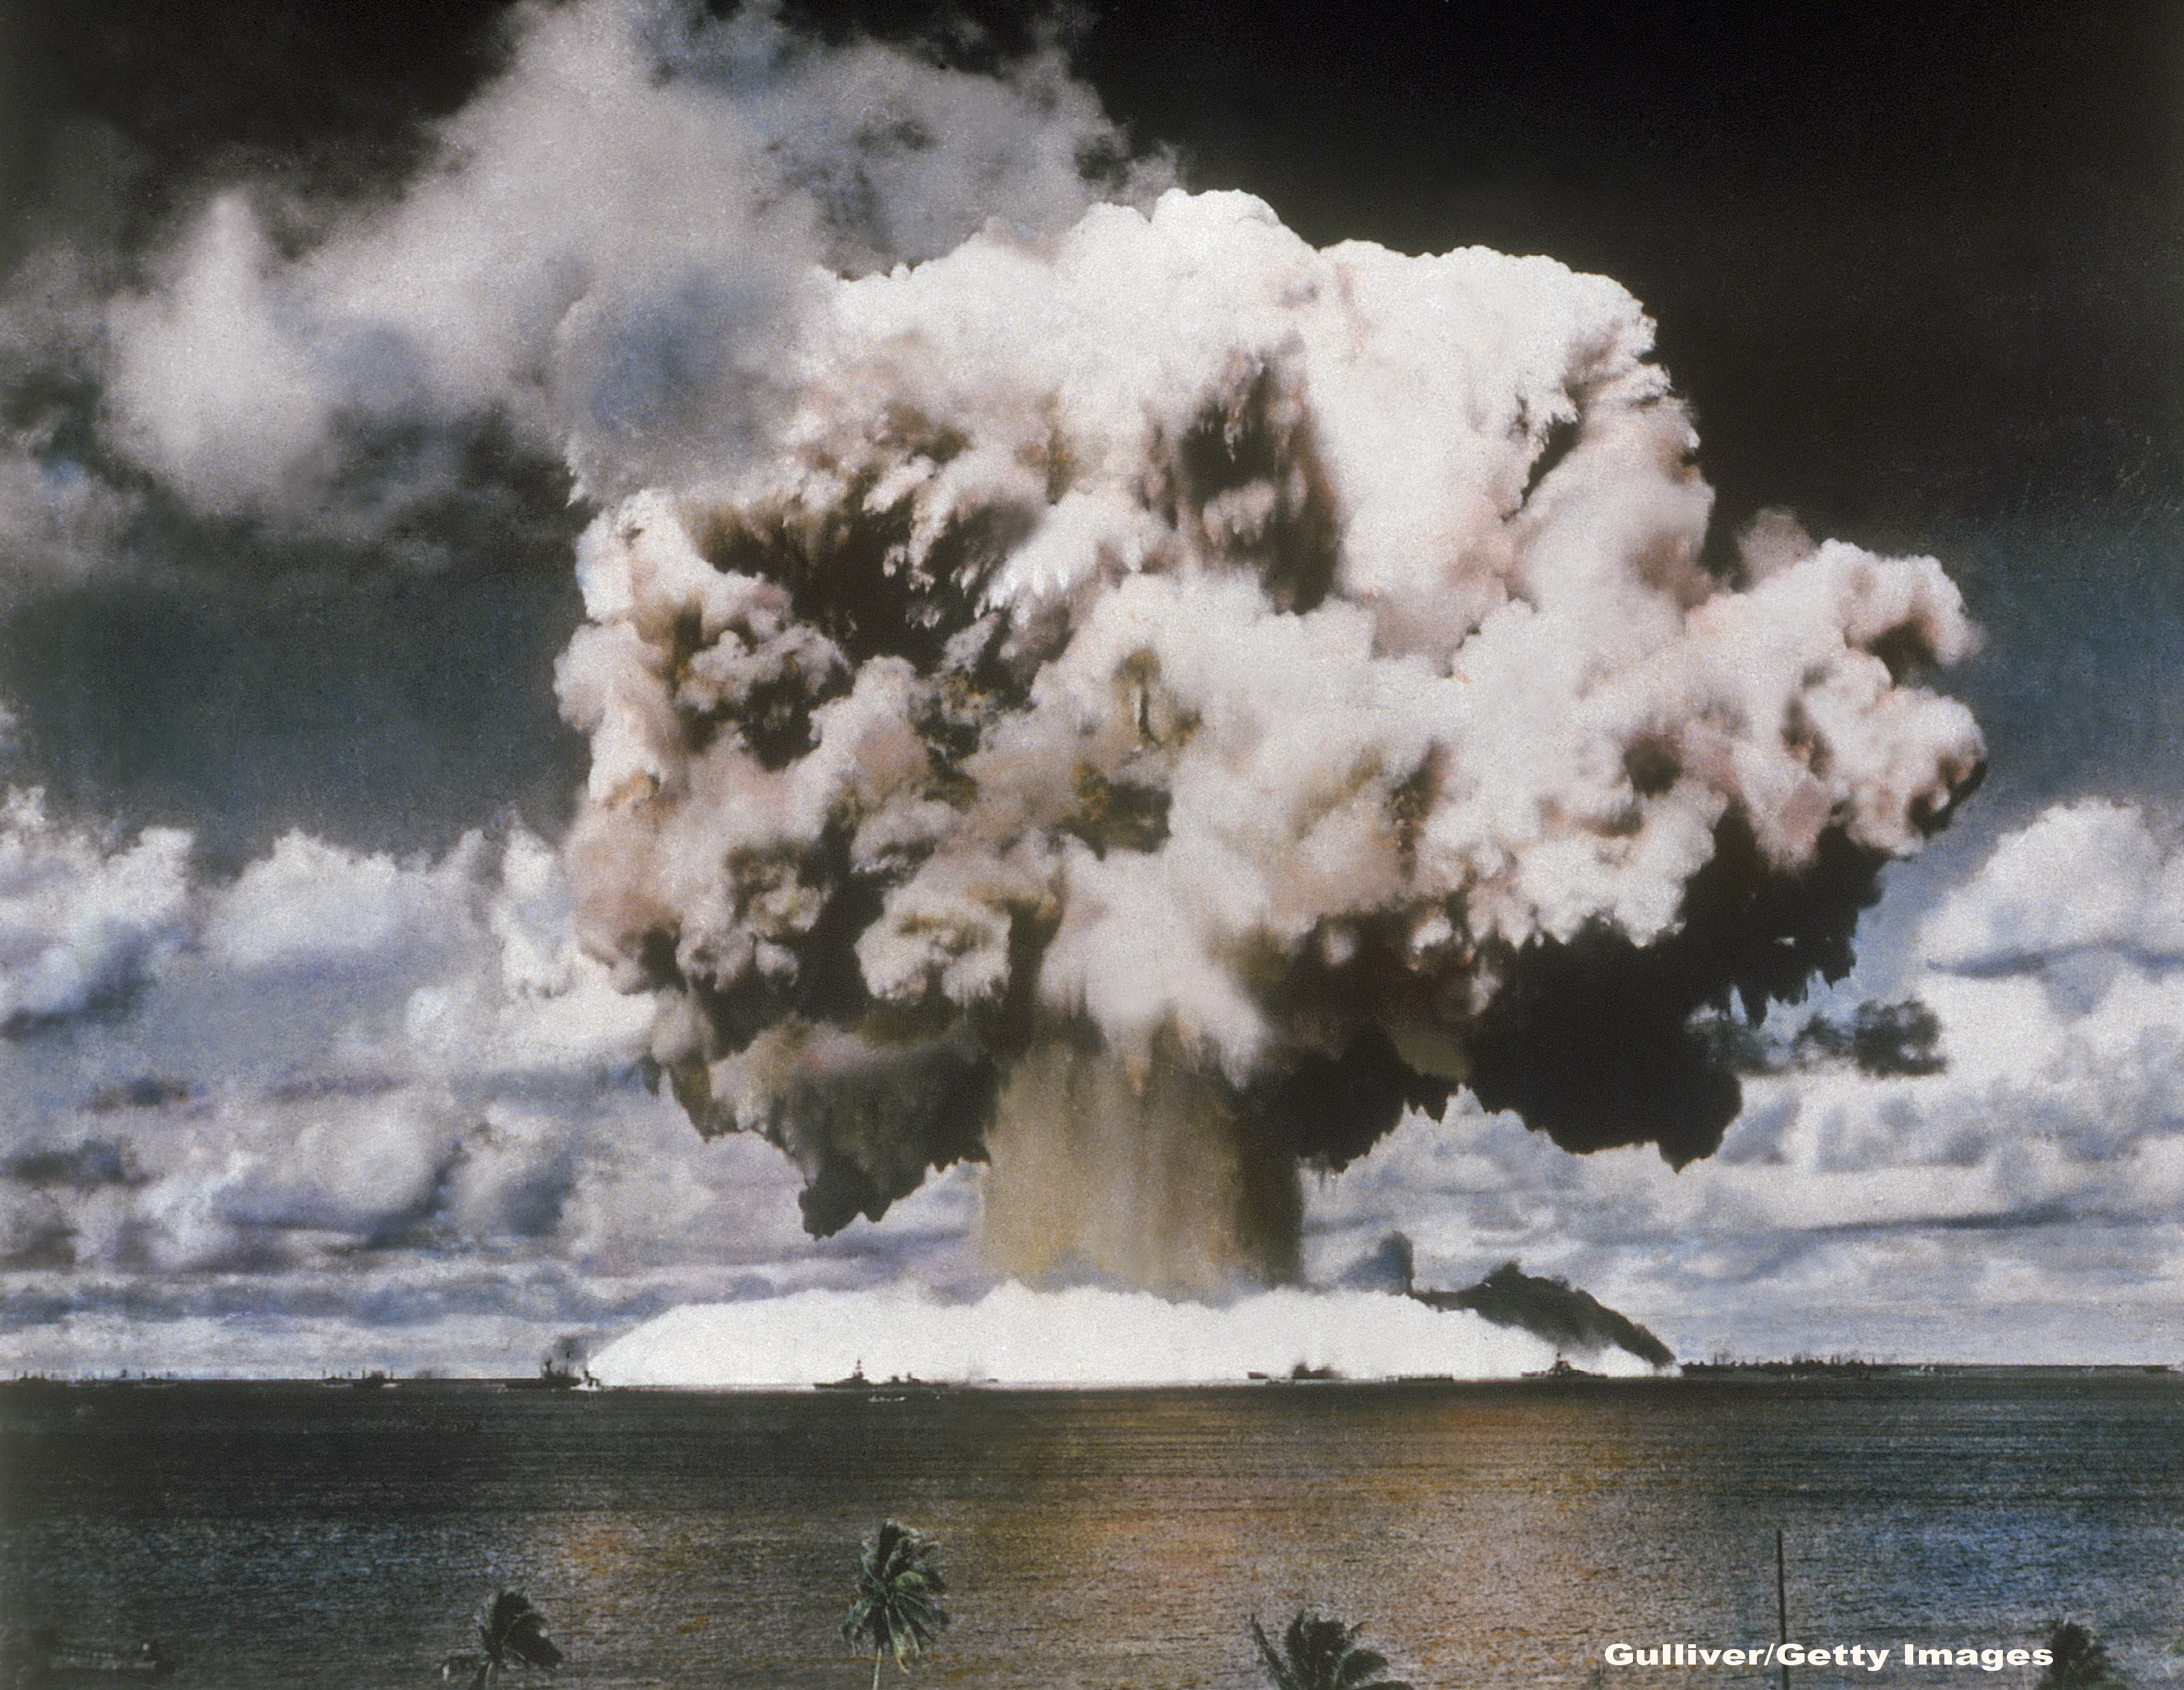 Top Secret: America a planuit sa arunce 12 bombe atomice asupra Japoniei